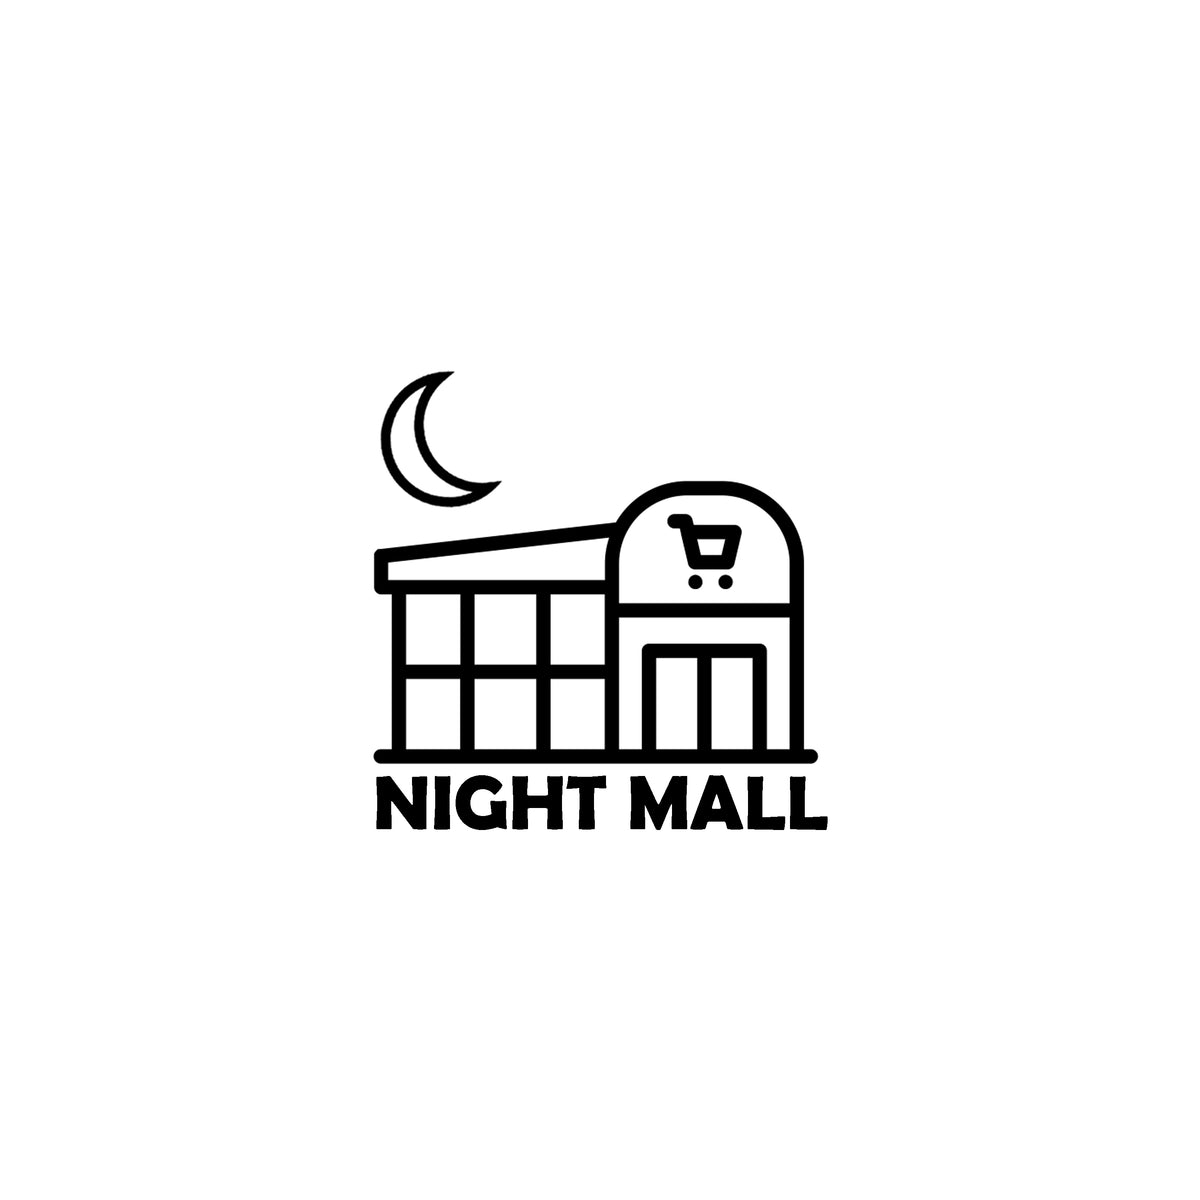 The Night Mall